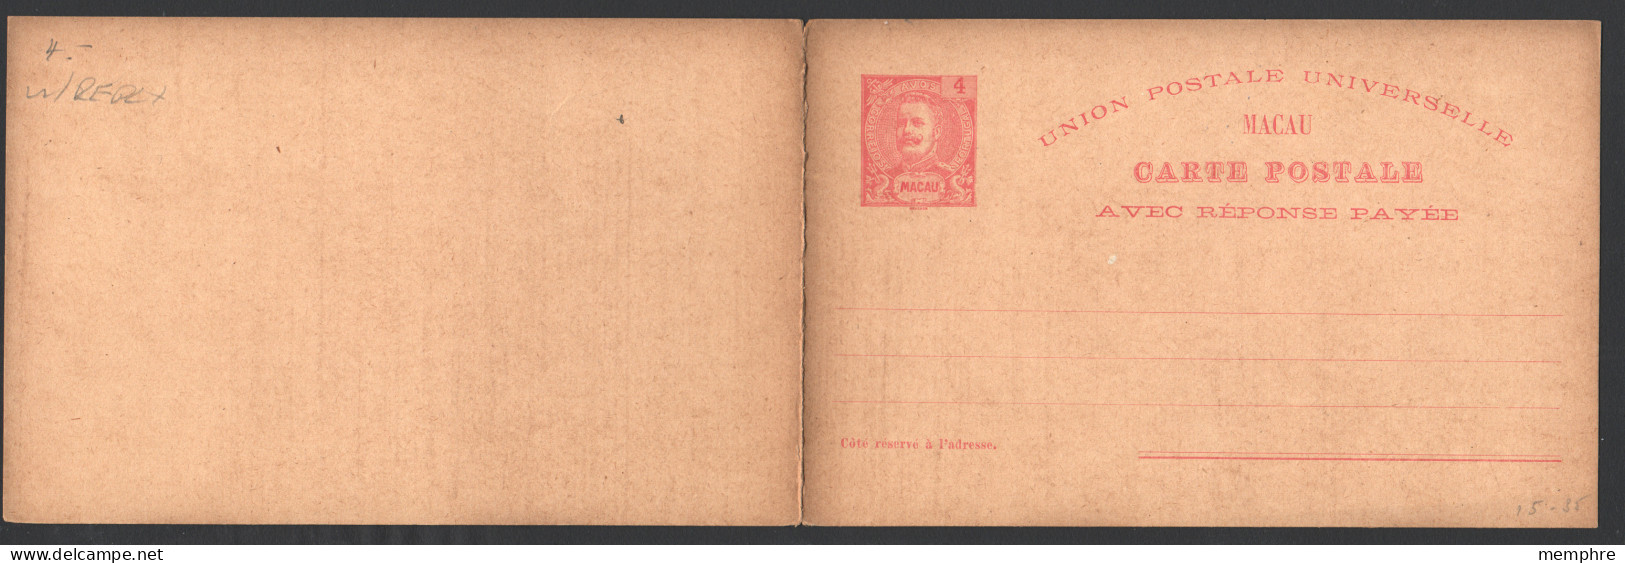 1903  Carte Postale Avec Réponse Payée Carlos 4 Avos  Neuve - Briefe U. Dokumente